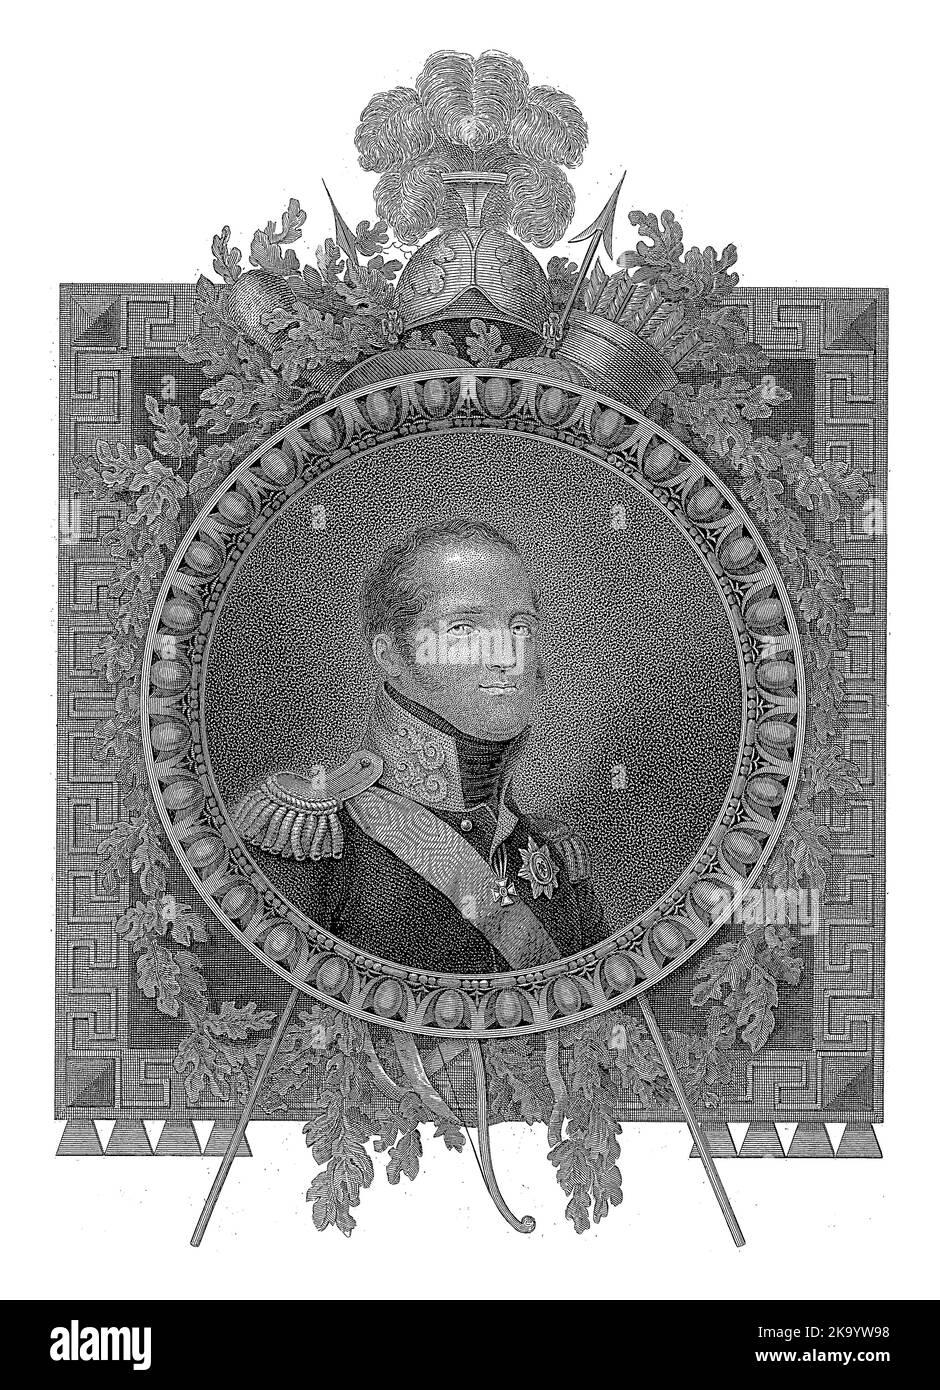 Portrait of Tsar Alexander I of Russia, Walraad Nieuwhoff, after Gerrit Jacobus Geusendam, 1825 - 1827 Portrait of Alexander I, Tsar of Russia, dresse Stock Photo